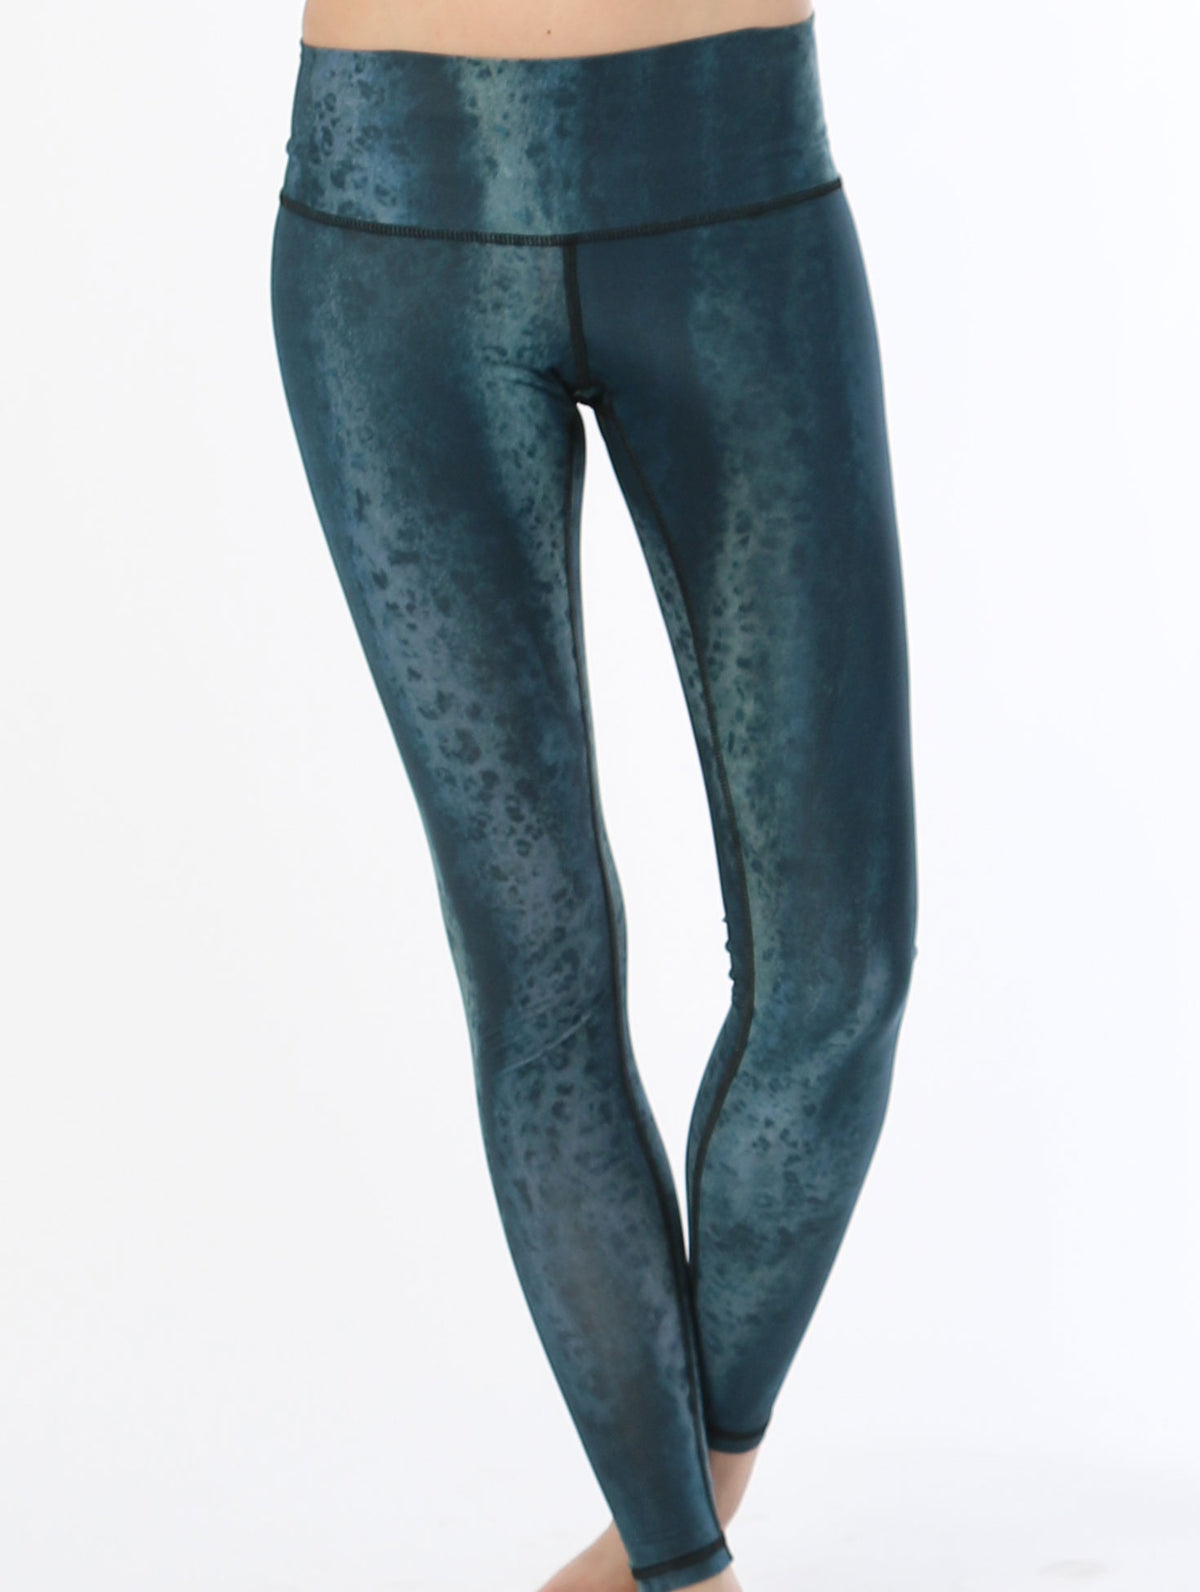 Snakeskin Turquoise Legging – Amanda Mills